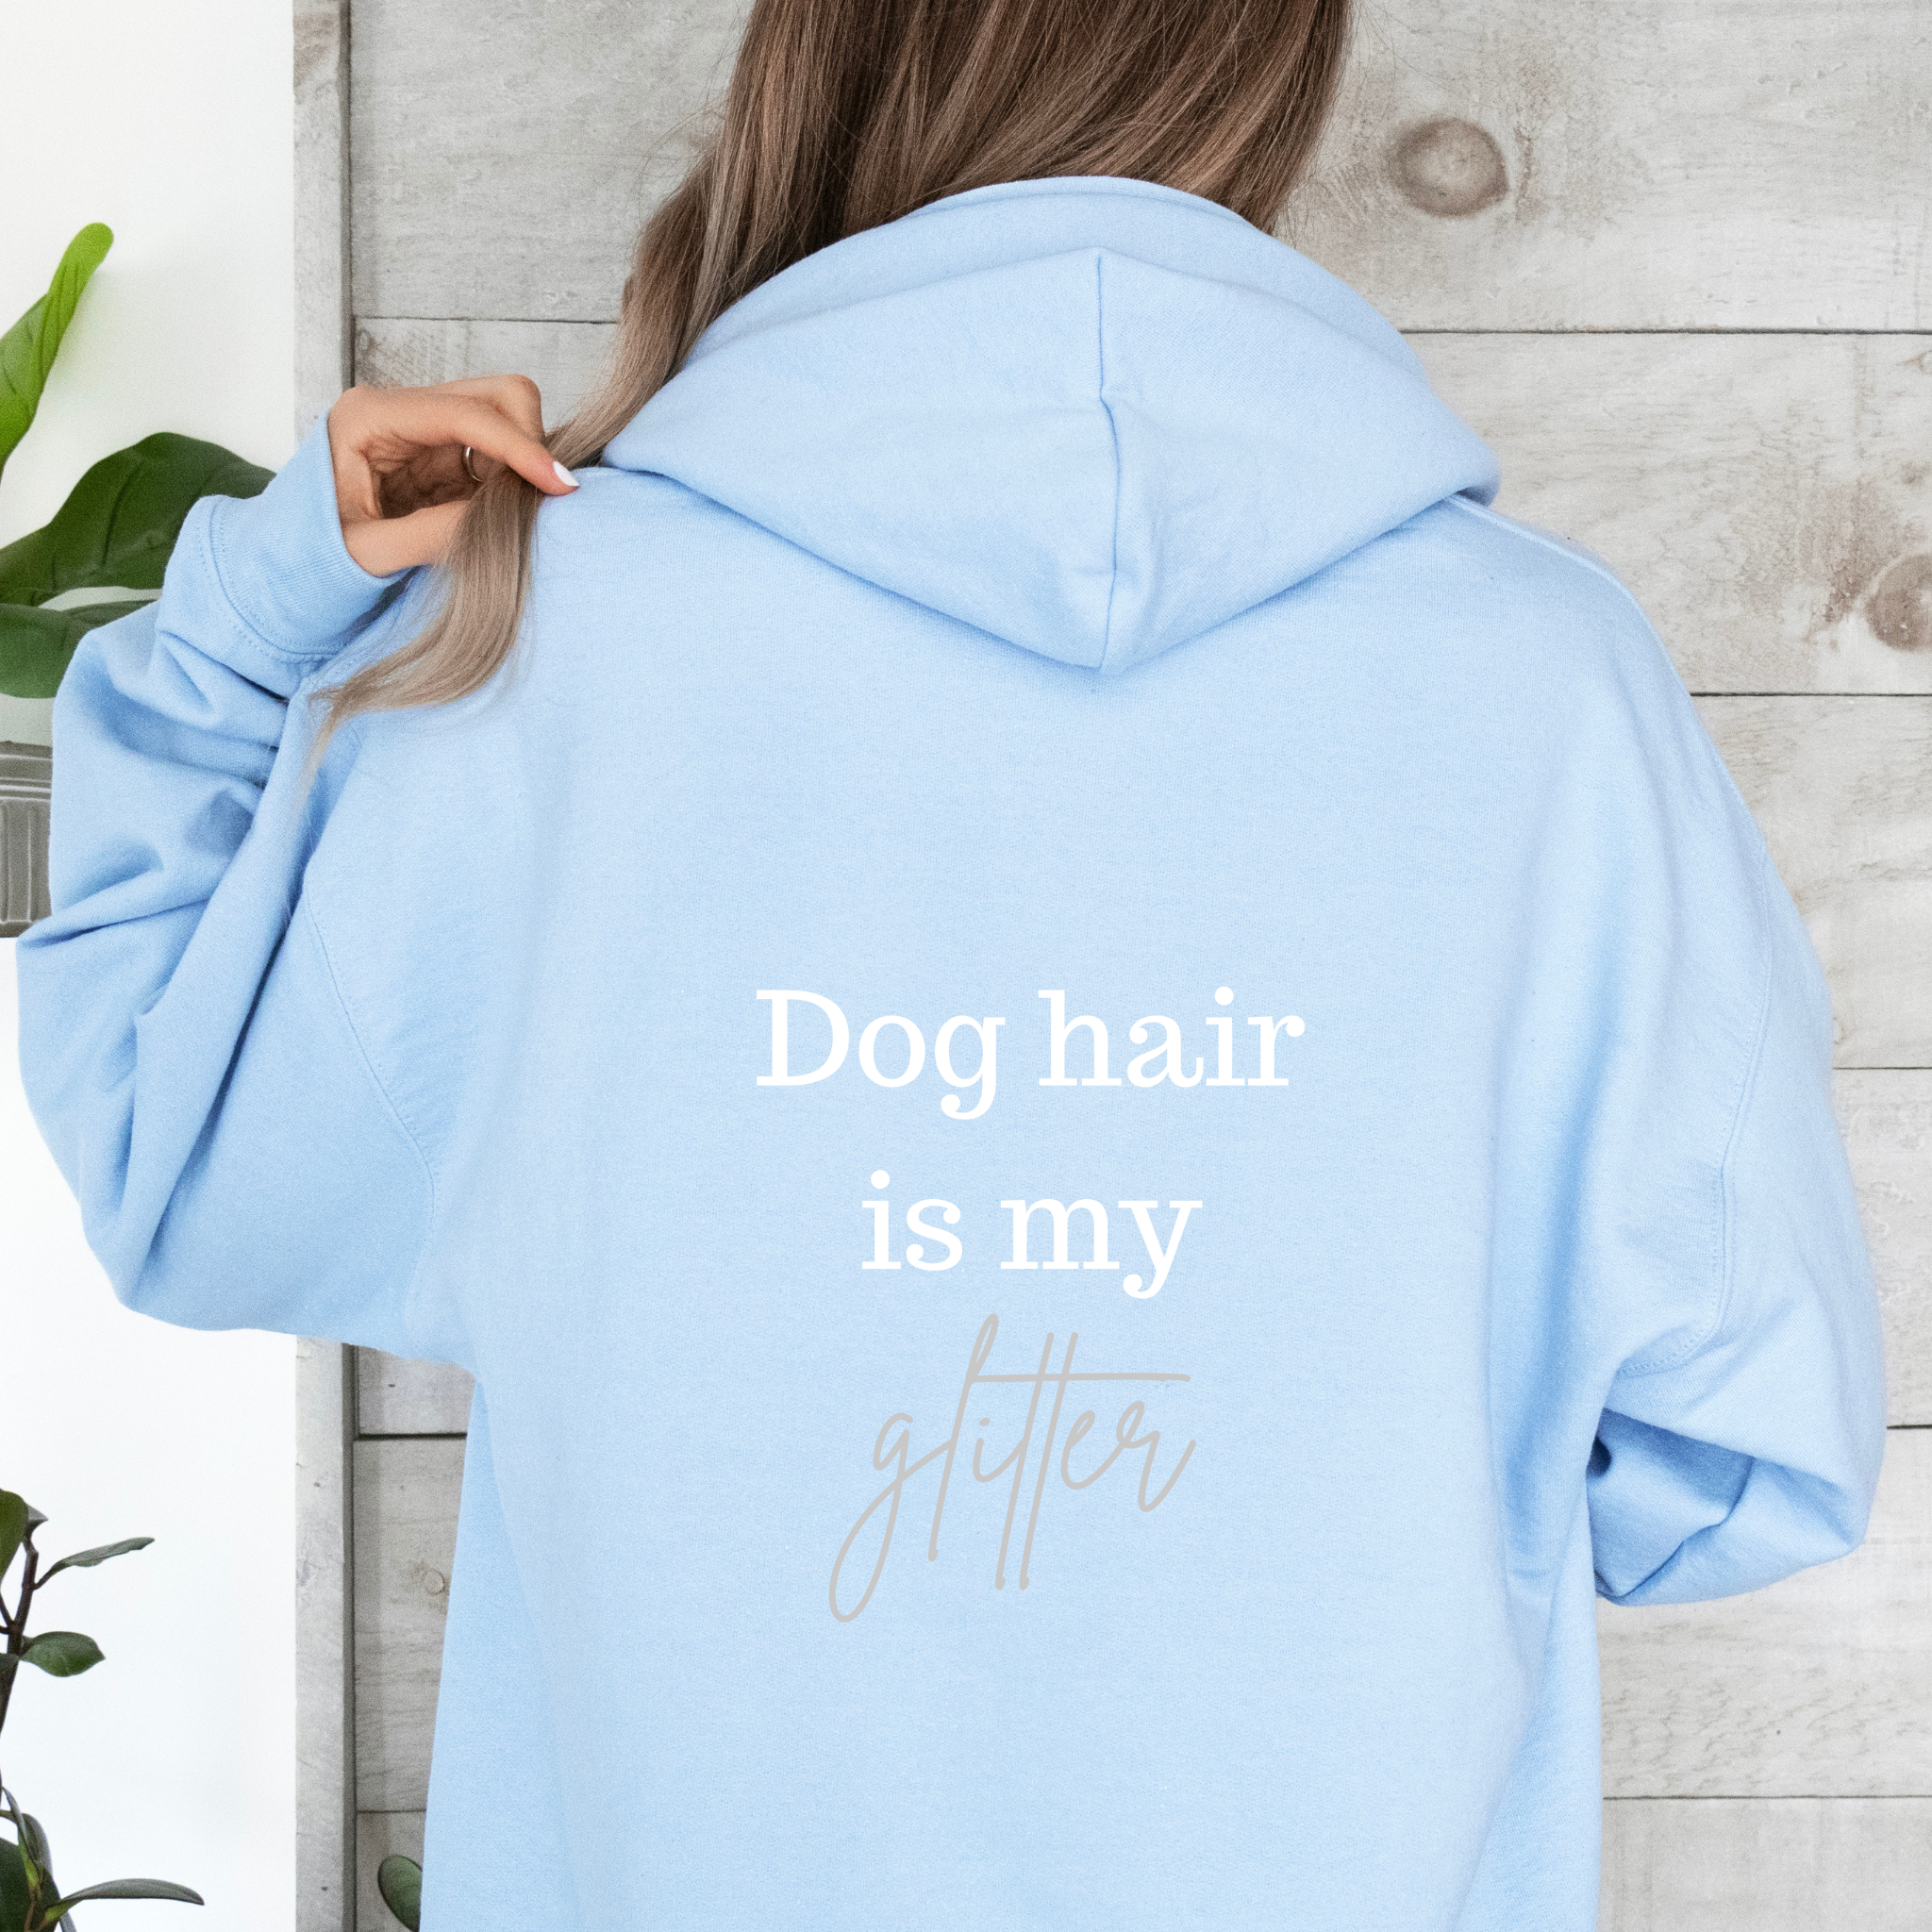 "Dog hair is my glitter" -huppari